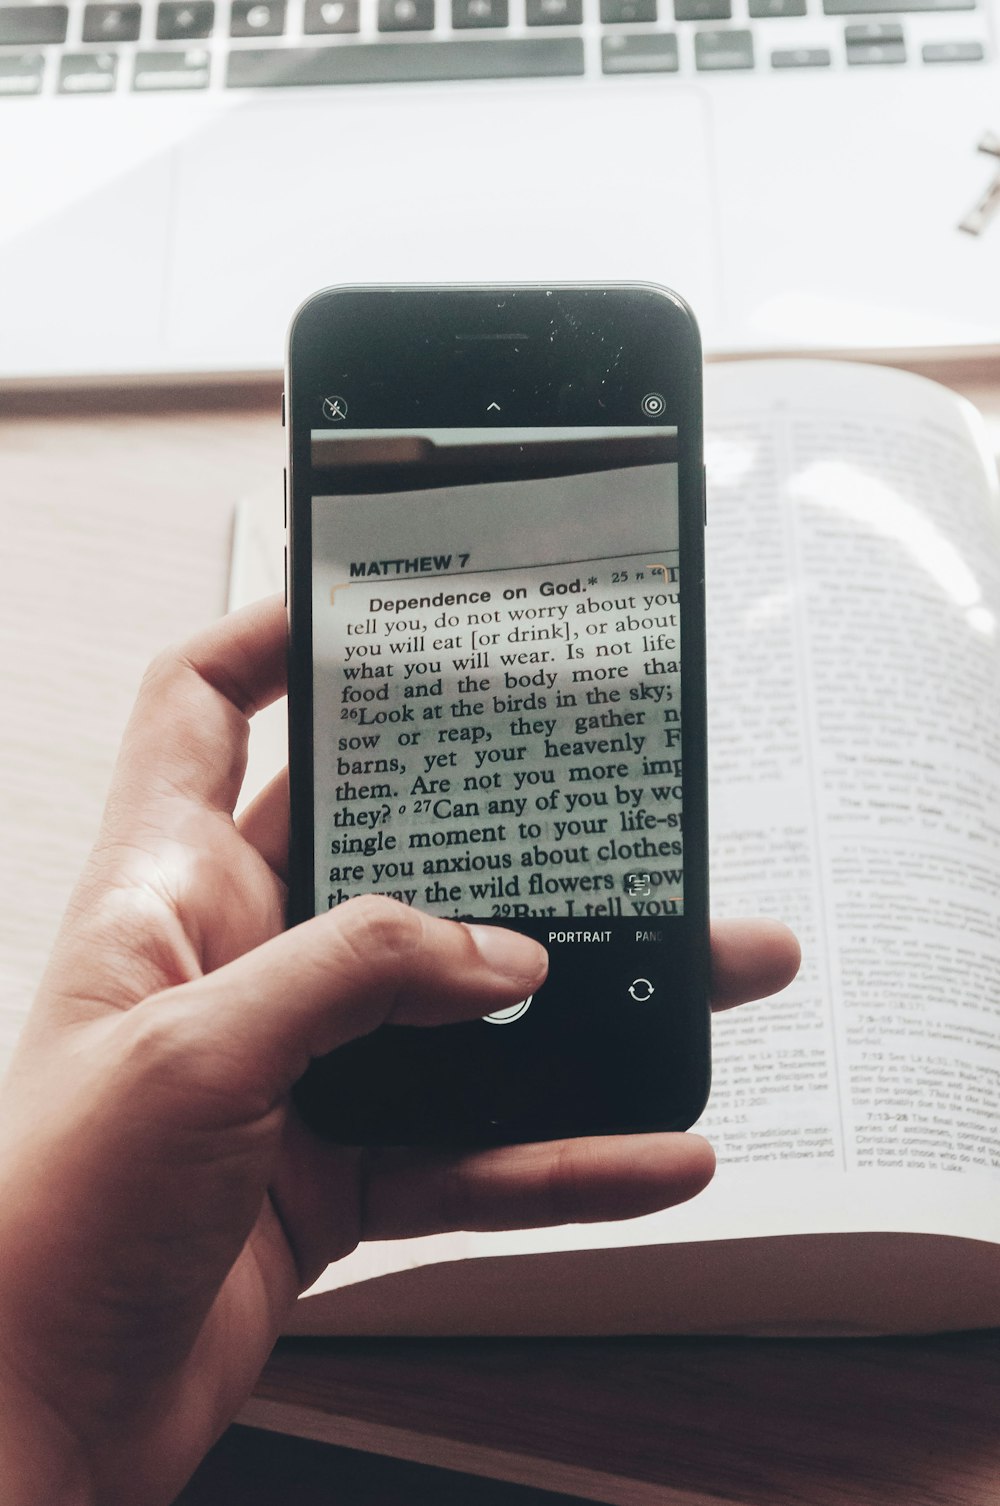 Una persona sosteniendo un teléfono celular frente a un libro